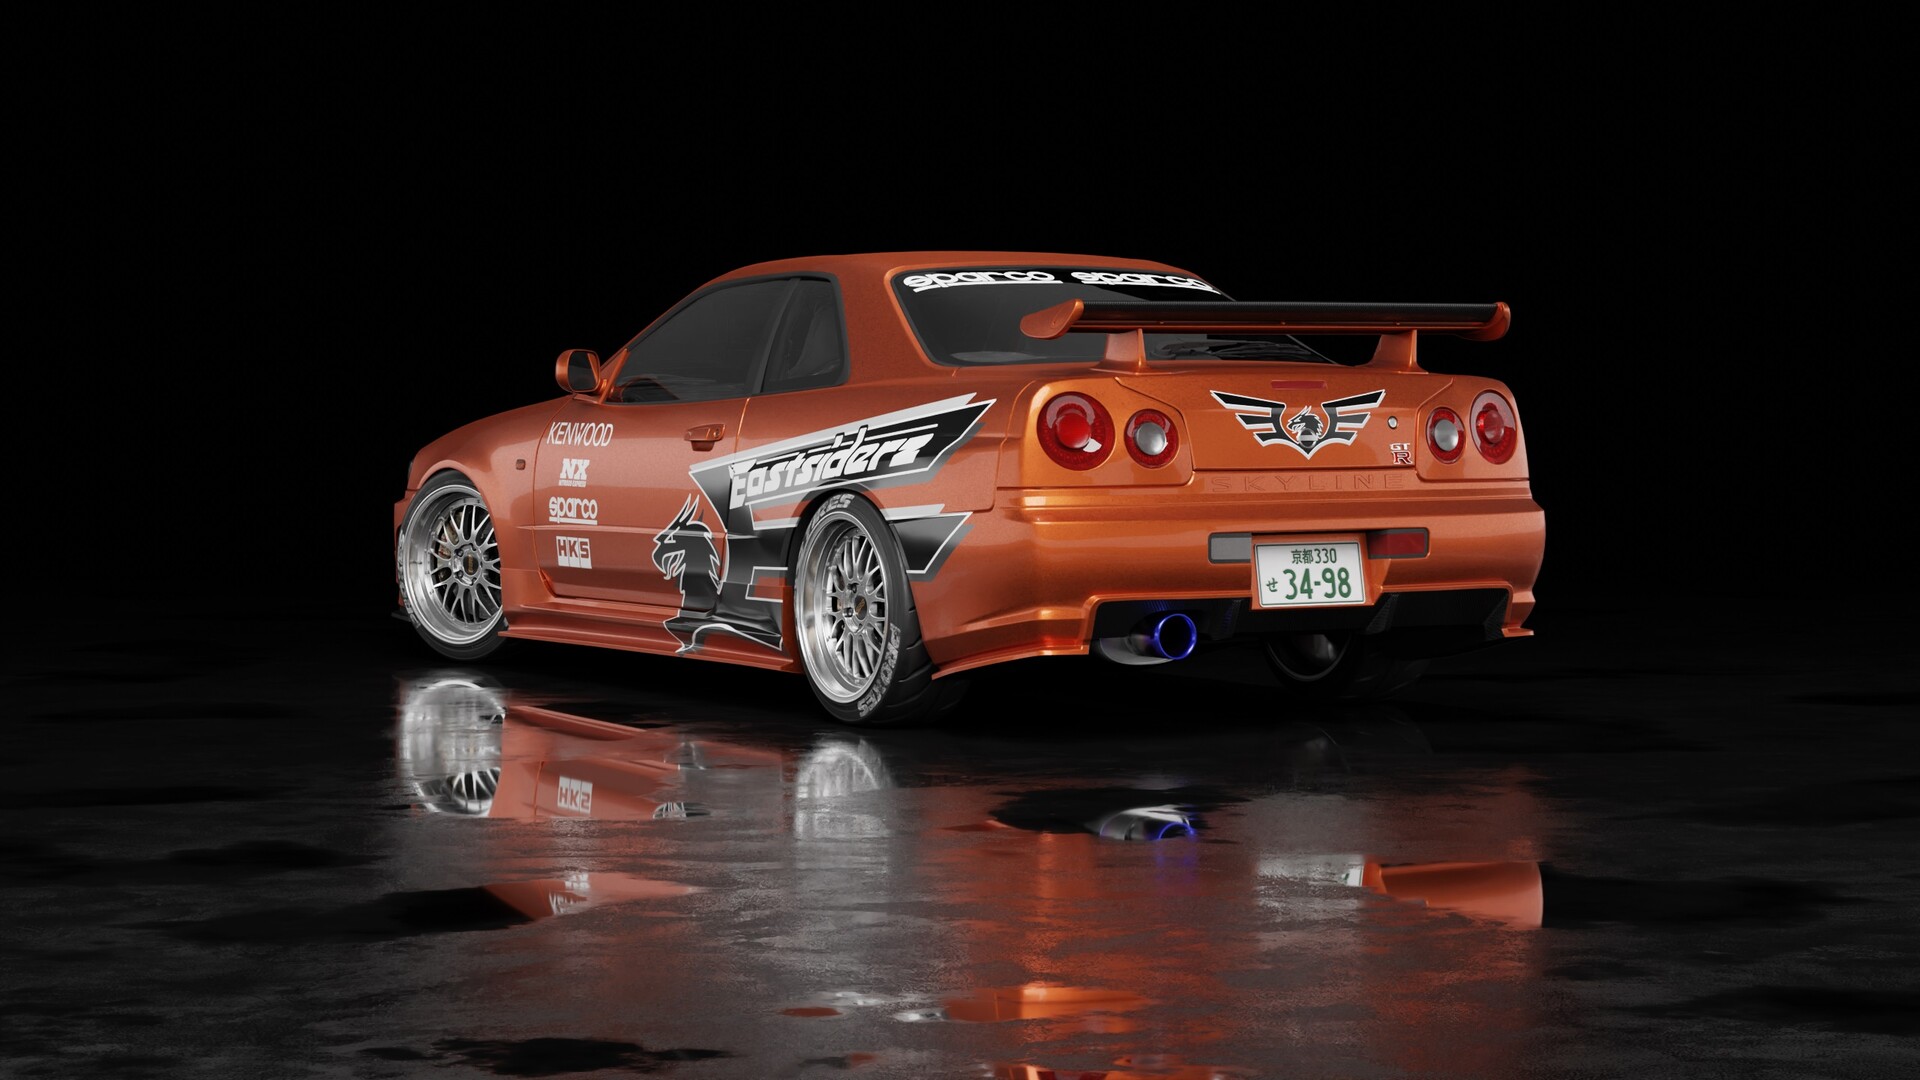 ArtStation - Eddie's Skyline (Nissan R34 GT-R) from Need for Speed